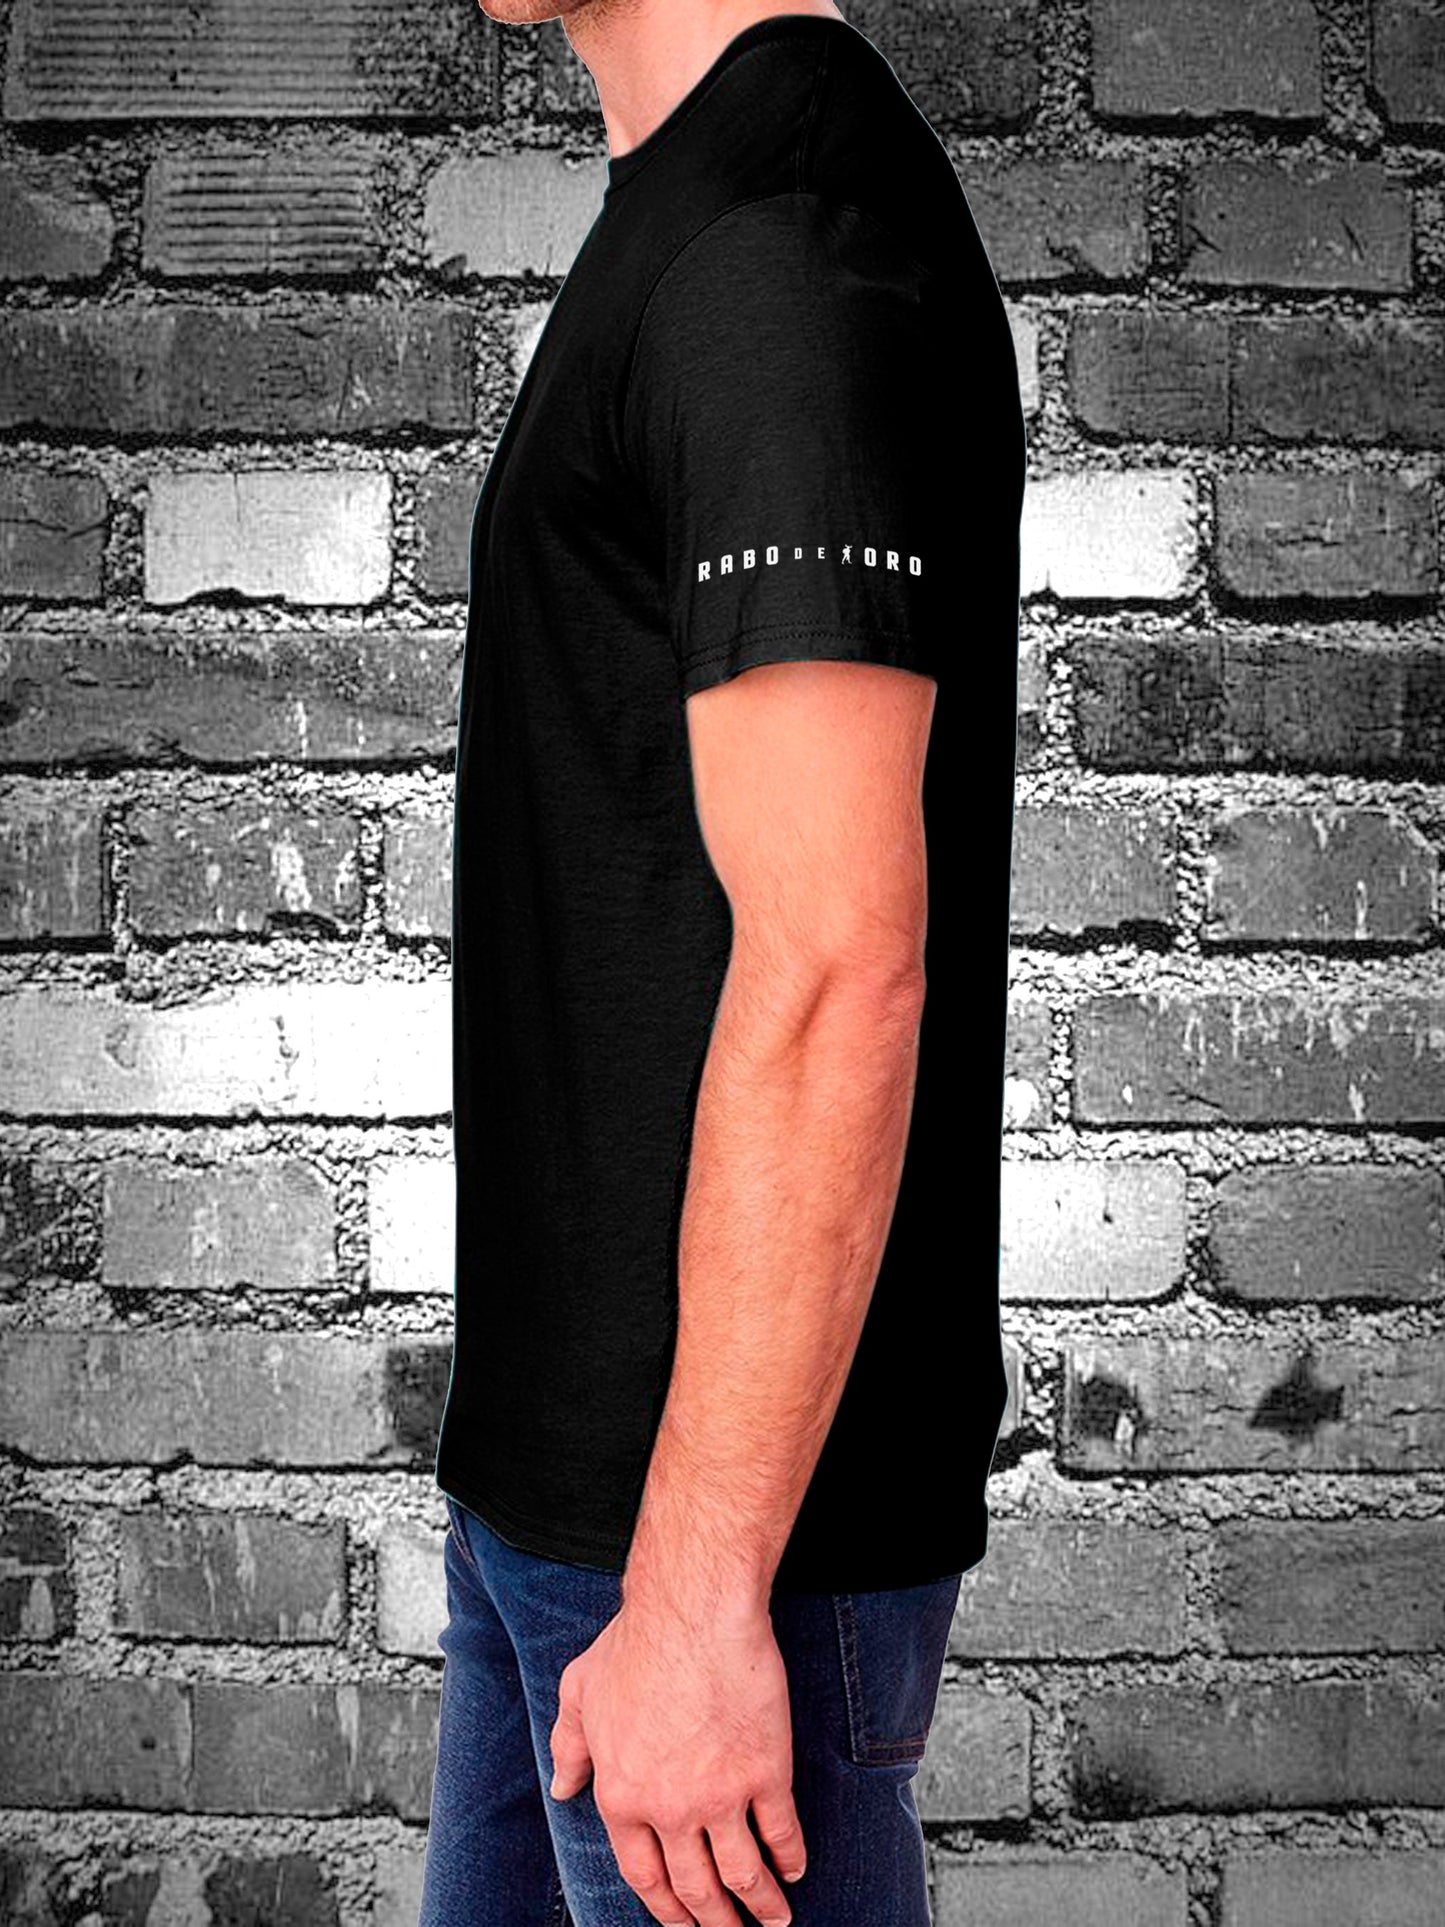 PIT LOVER T-Shirt with Minotaur Pit Lover Fetish design